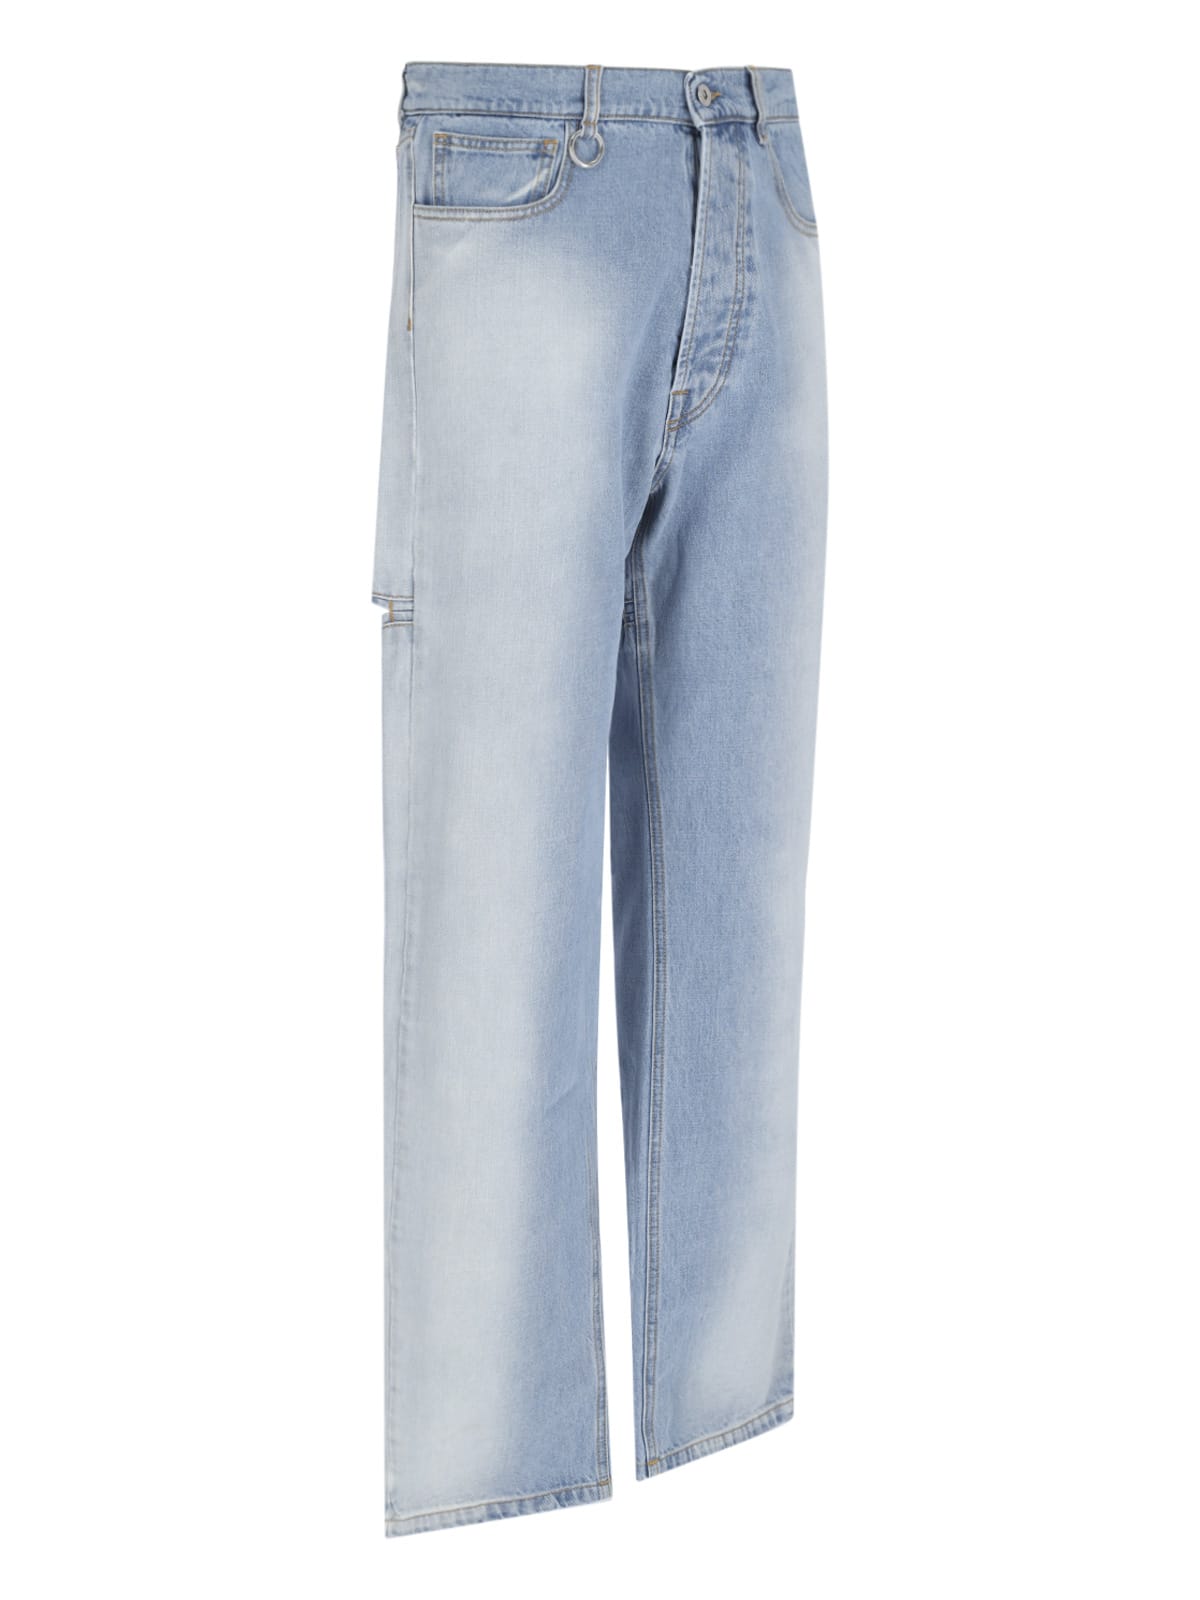 Shop Random Identities Straight Jeans In Light Blue